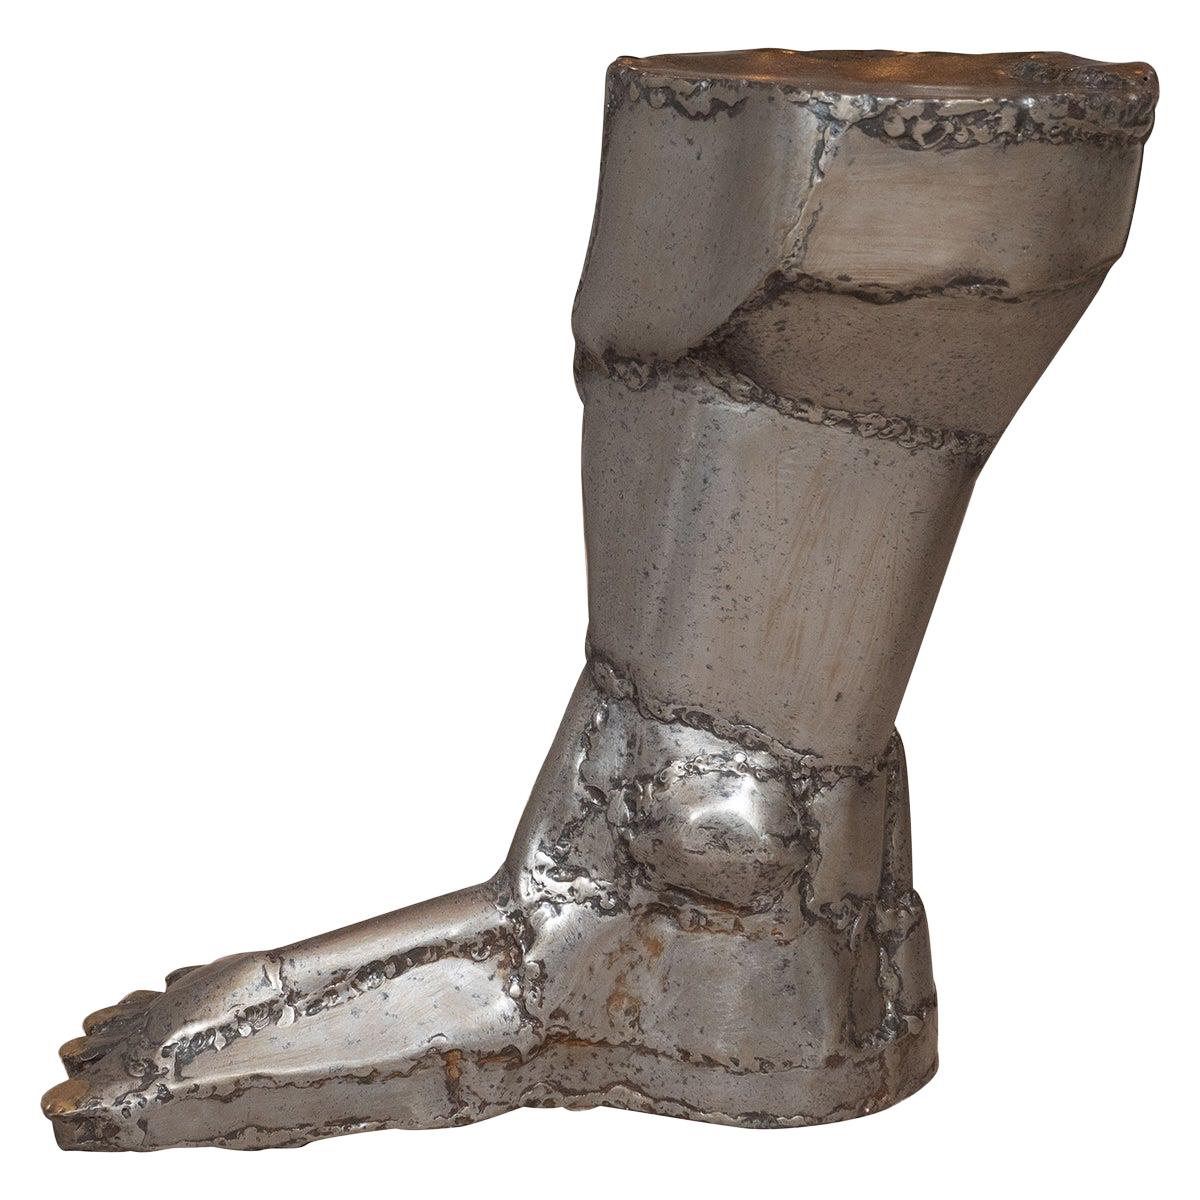 Brutalist "Patchwork" Foot Sculpture